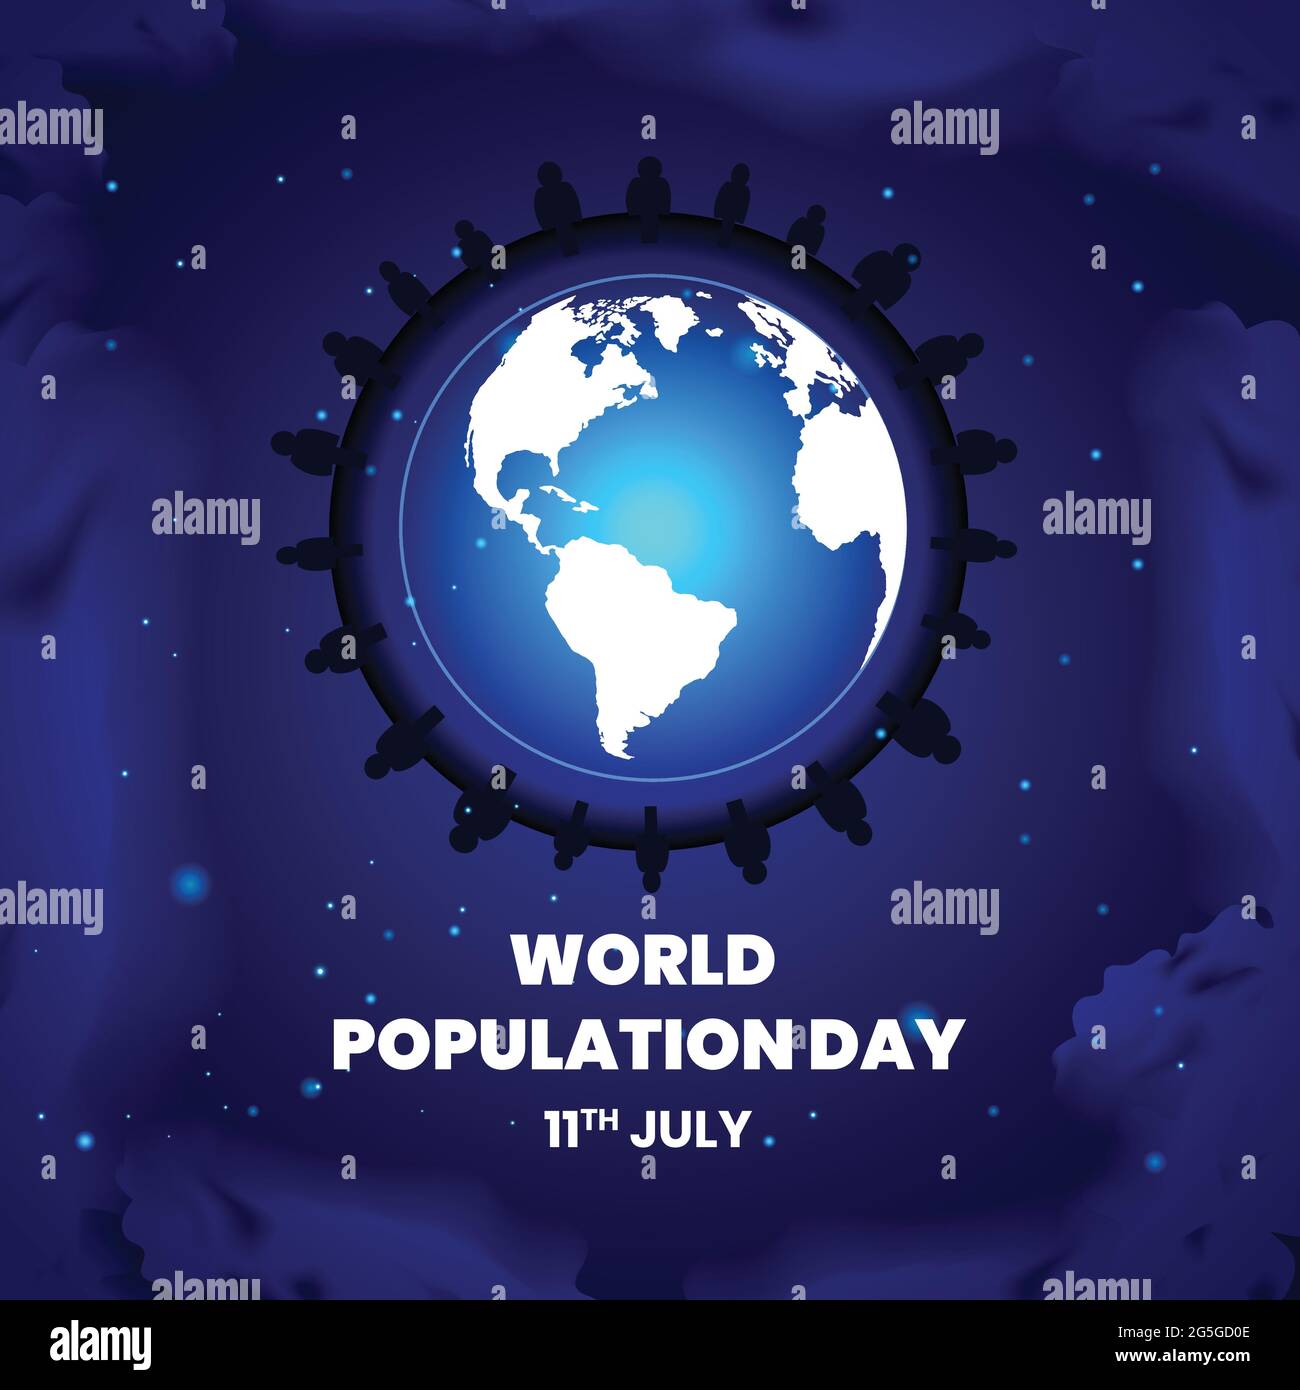 Earth population stock photography - Alamy